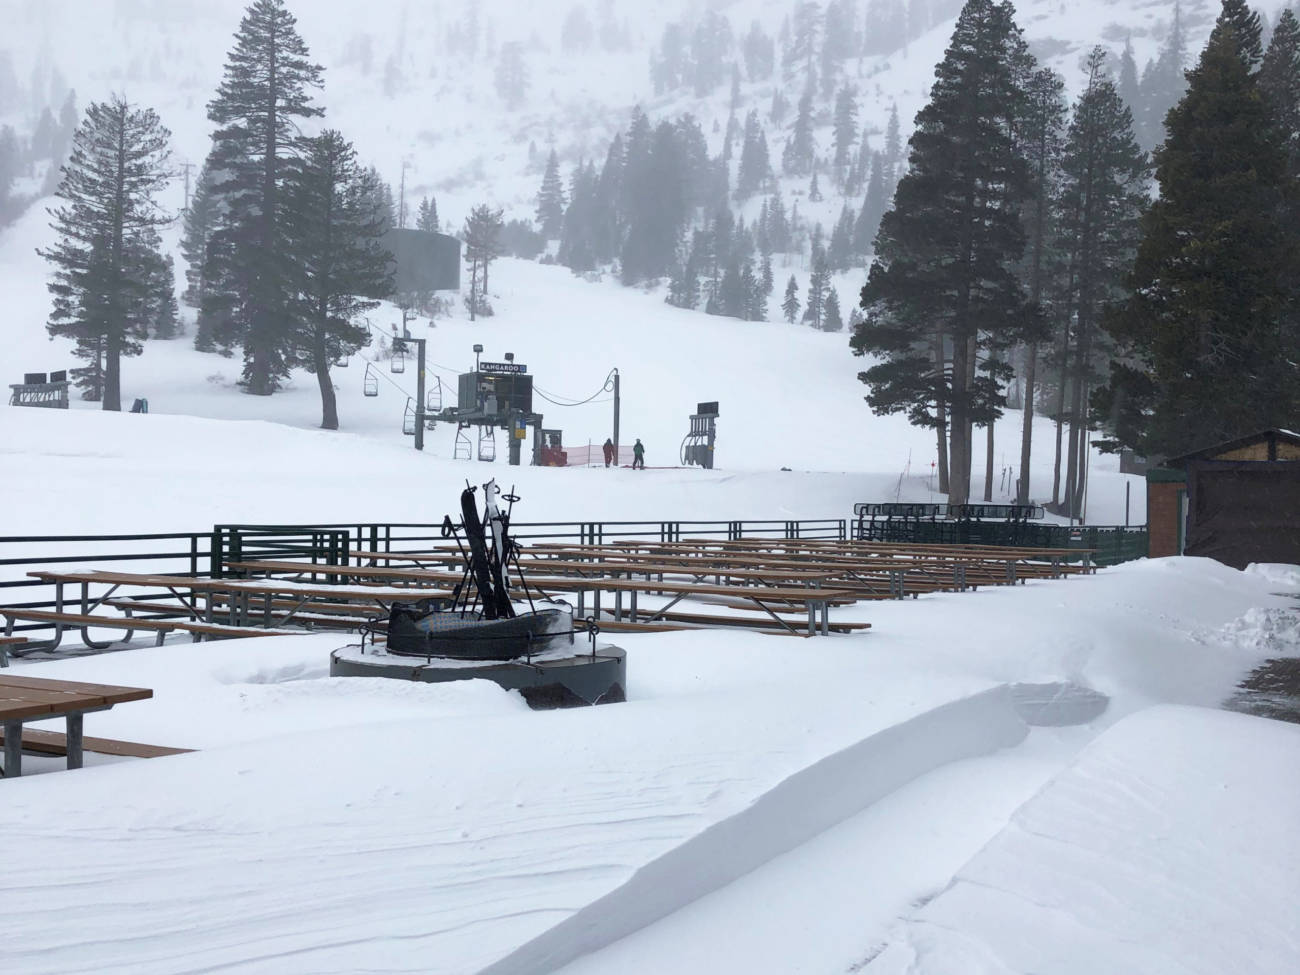 Snow accumulation on the Alpine Meadows deck on January 27, 2021